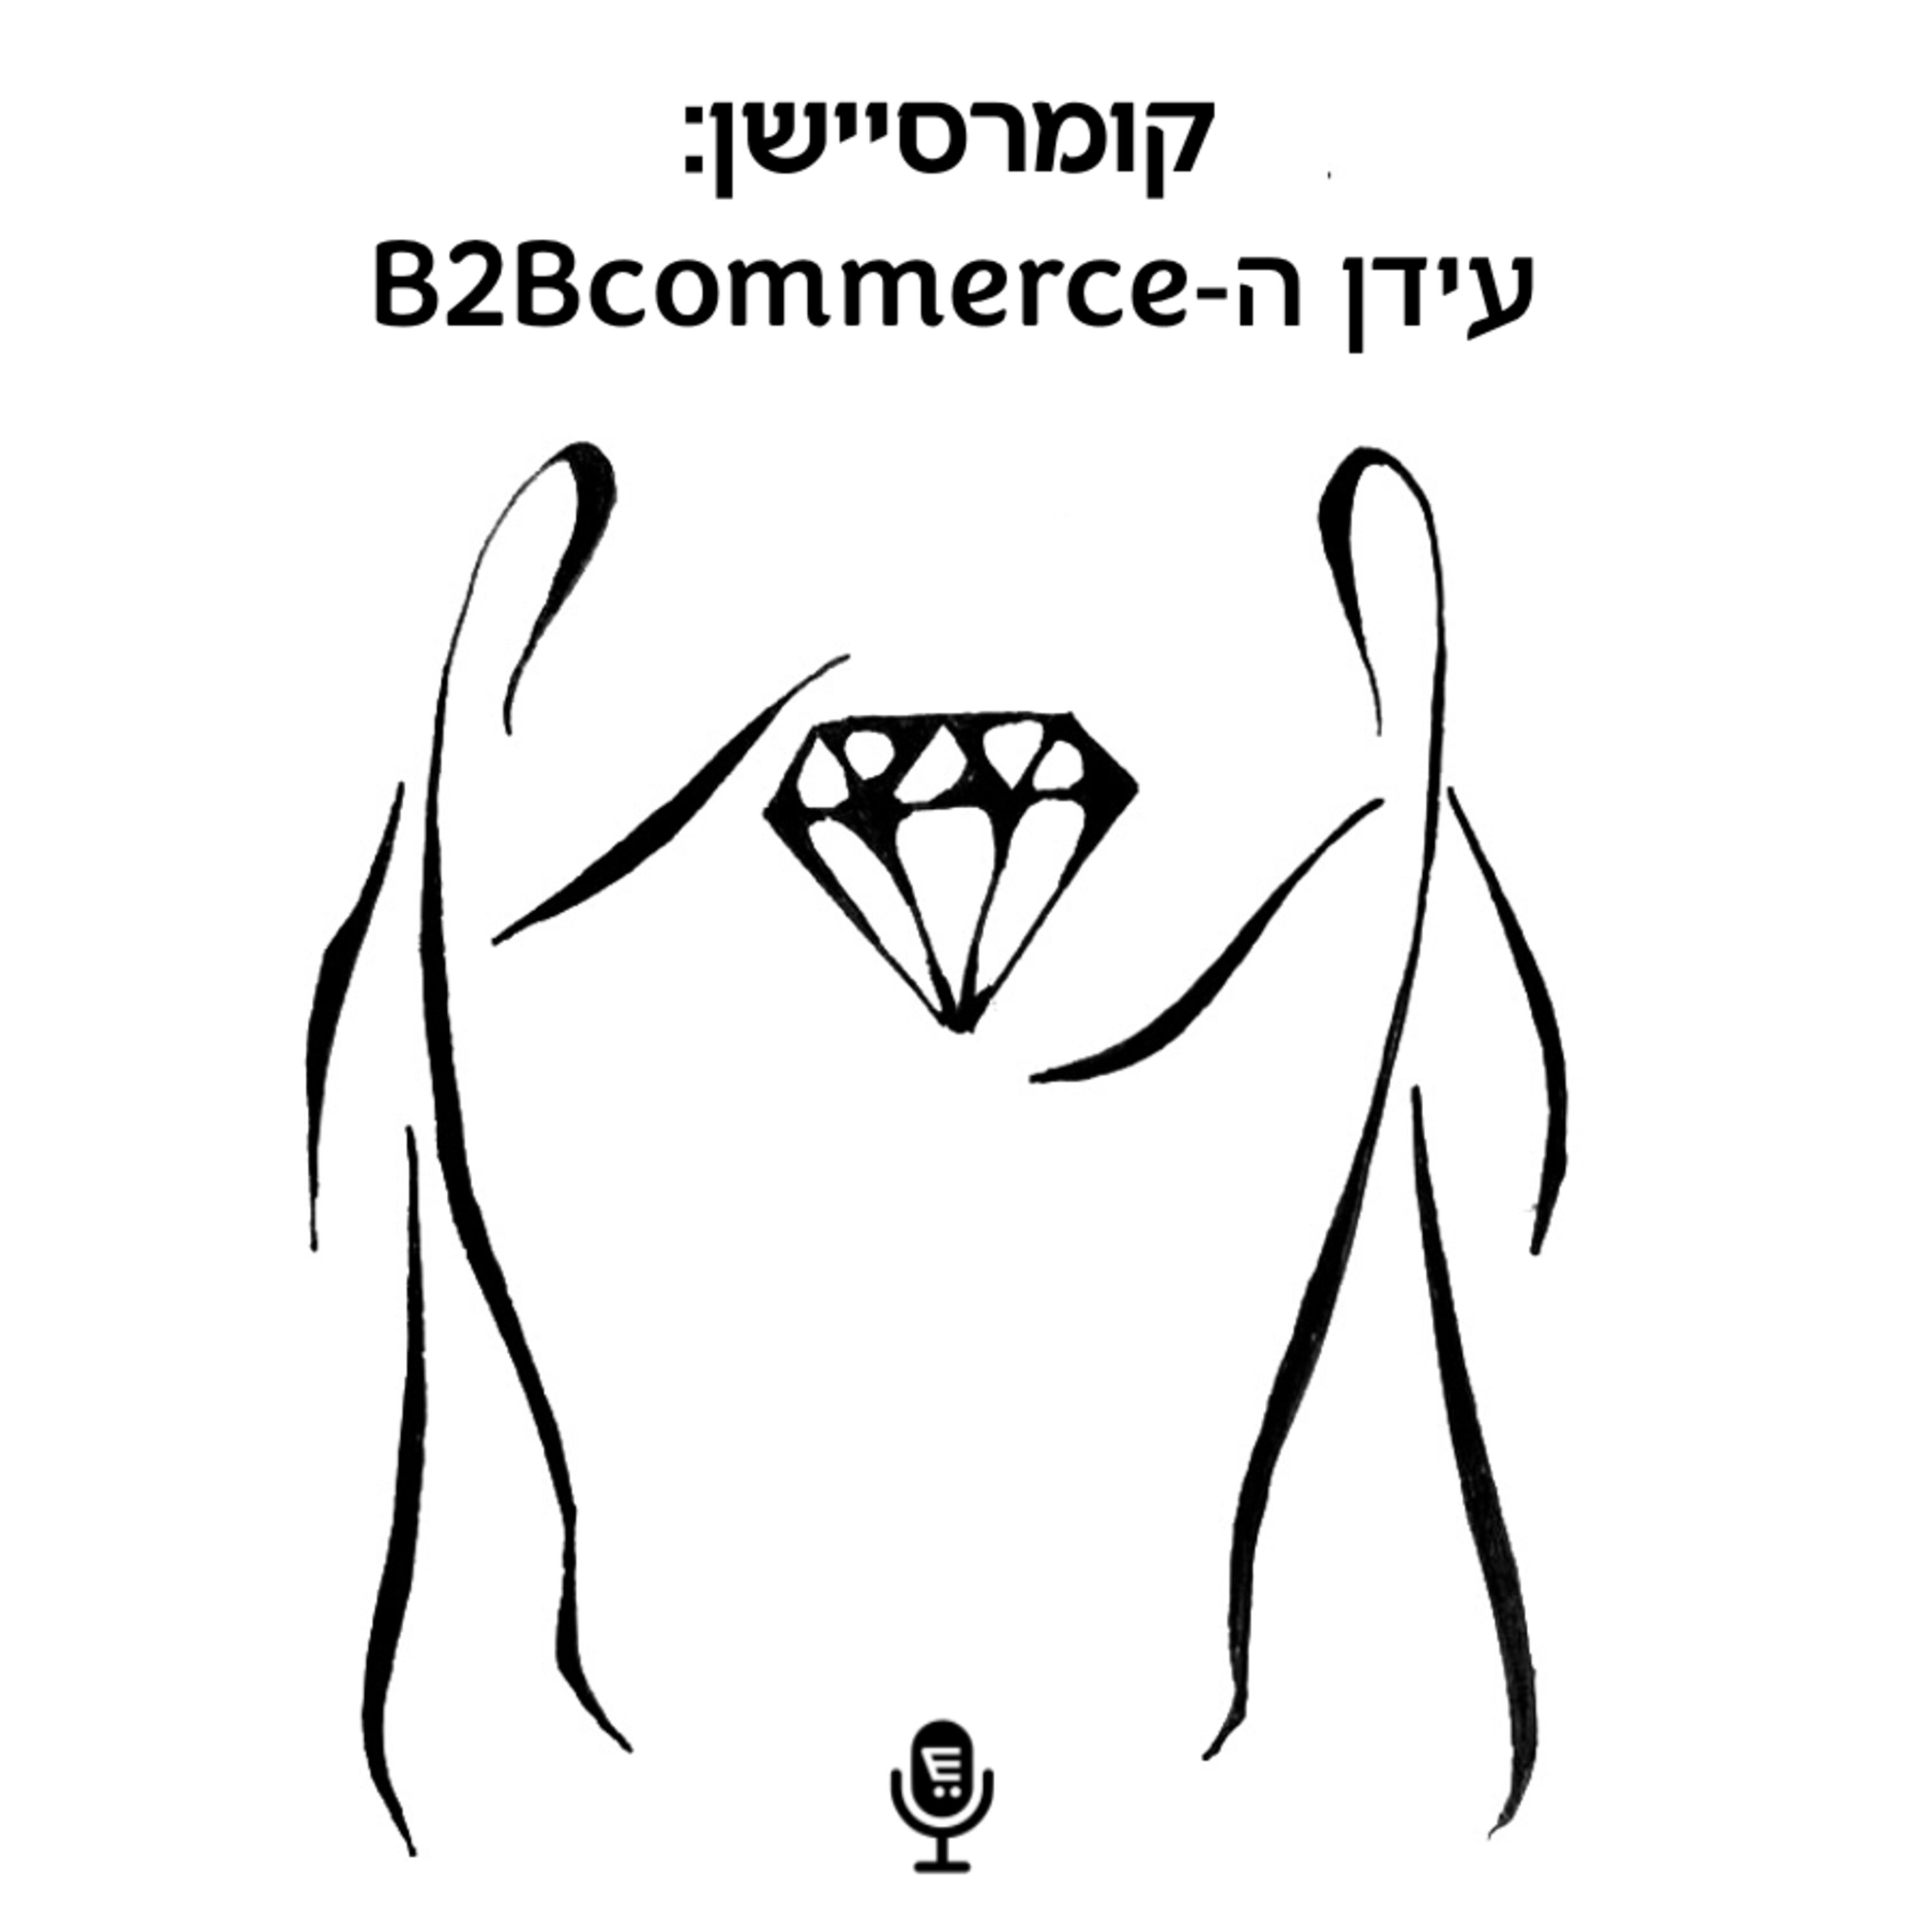 S7E3: קומרסיישן 117: עידן ה- B2B Commerce